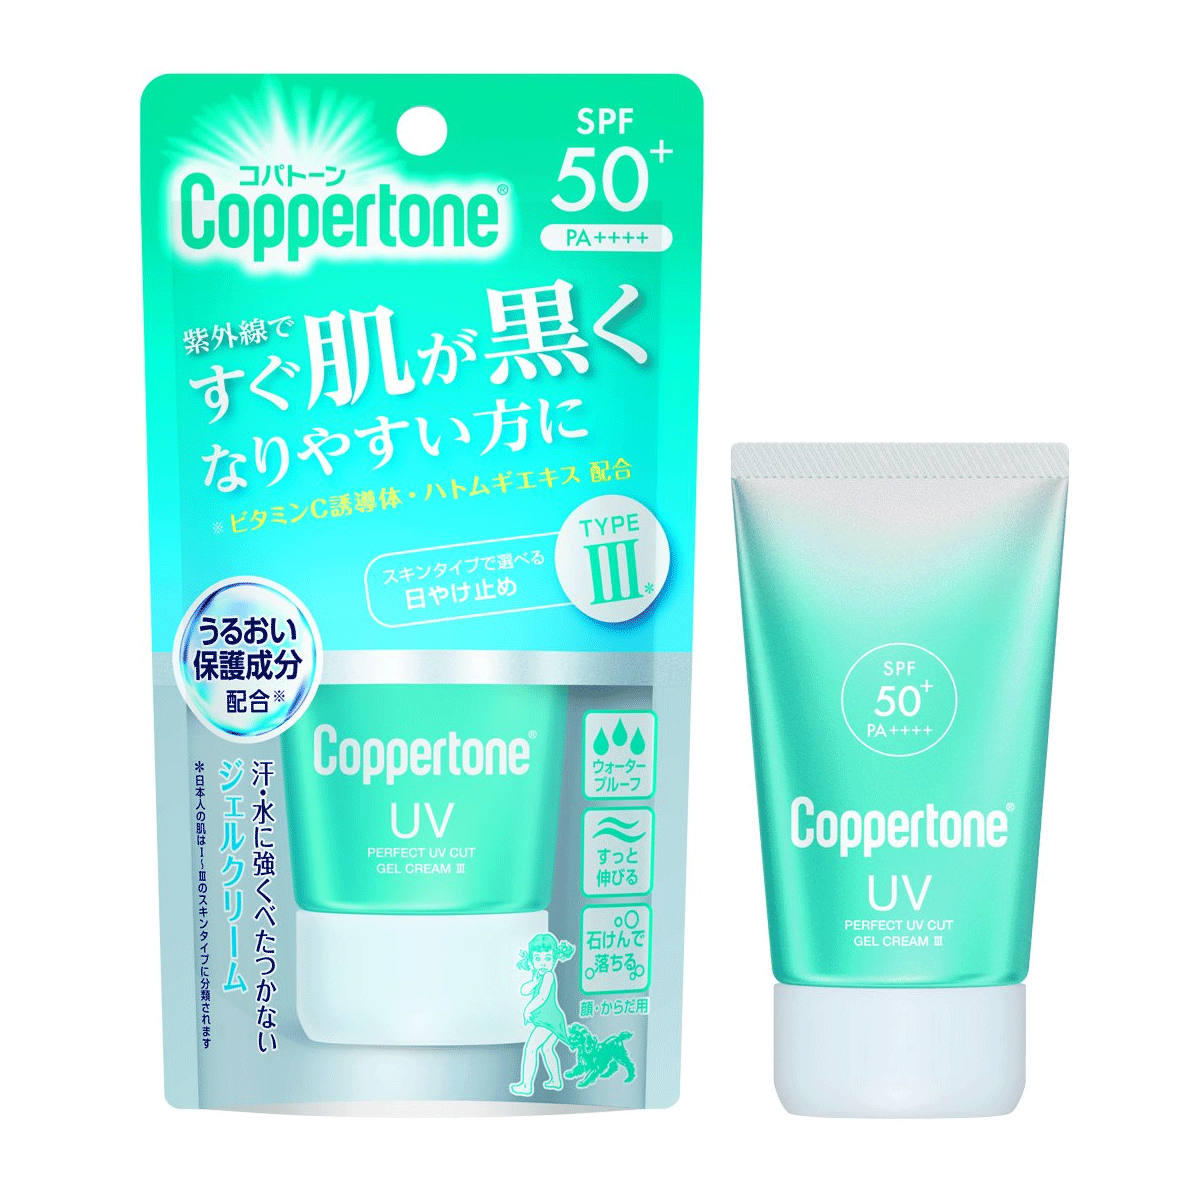 Coppertone 퍼펙트 UV 컷 젤크림 III 40g